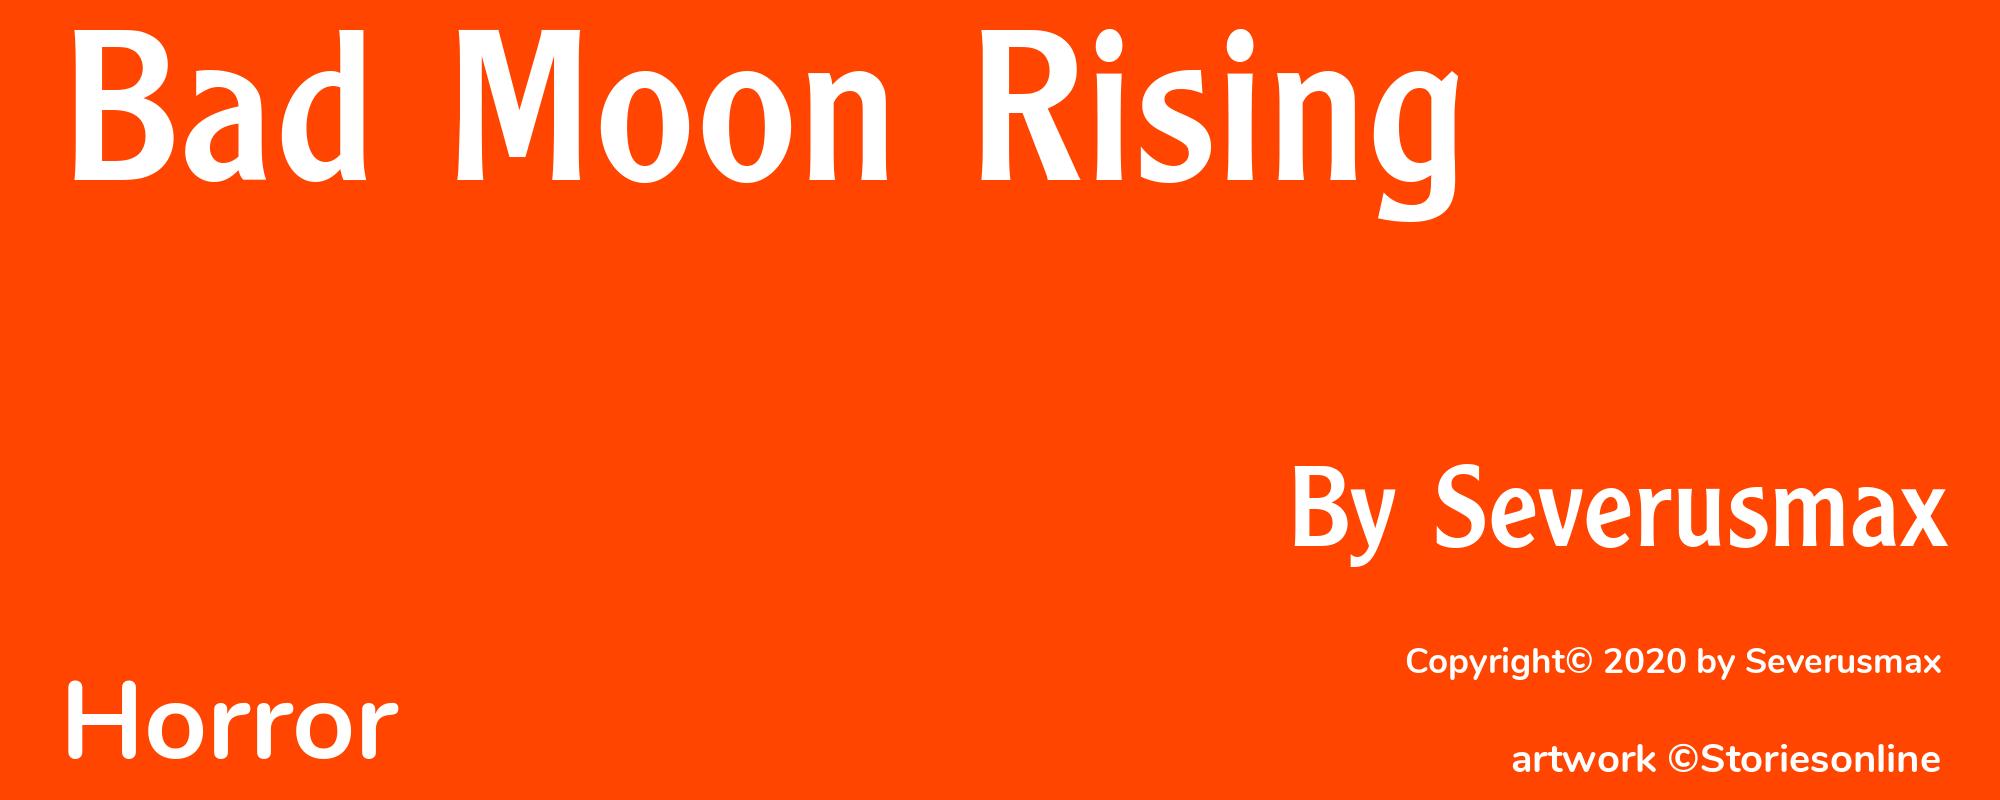 Bad Moon Rising - Cover